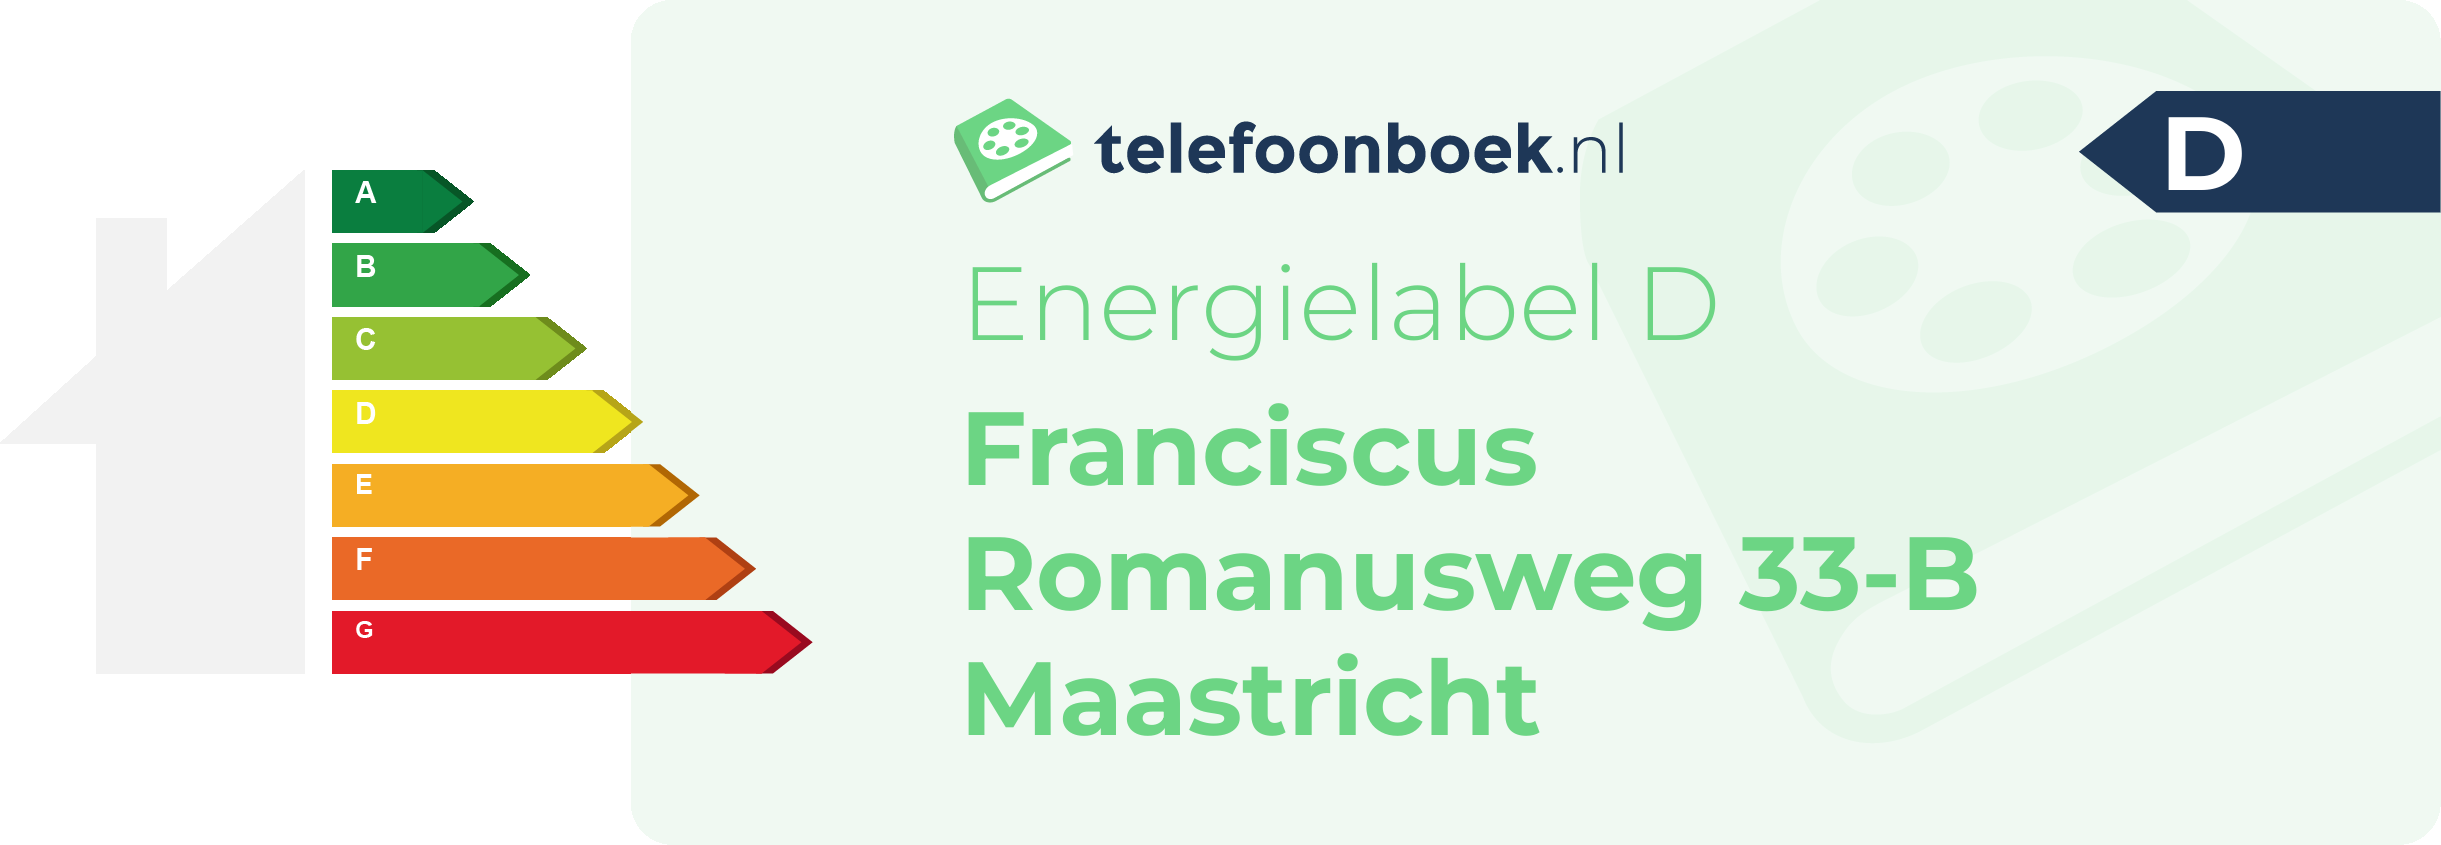 Energielabel Franciscus Romanusweg 33-B Maastricht